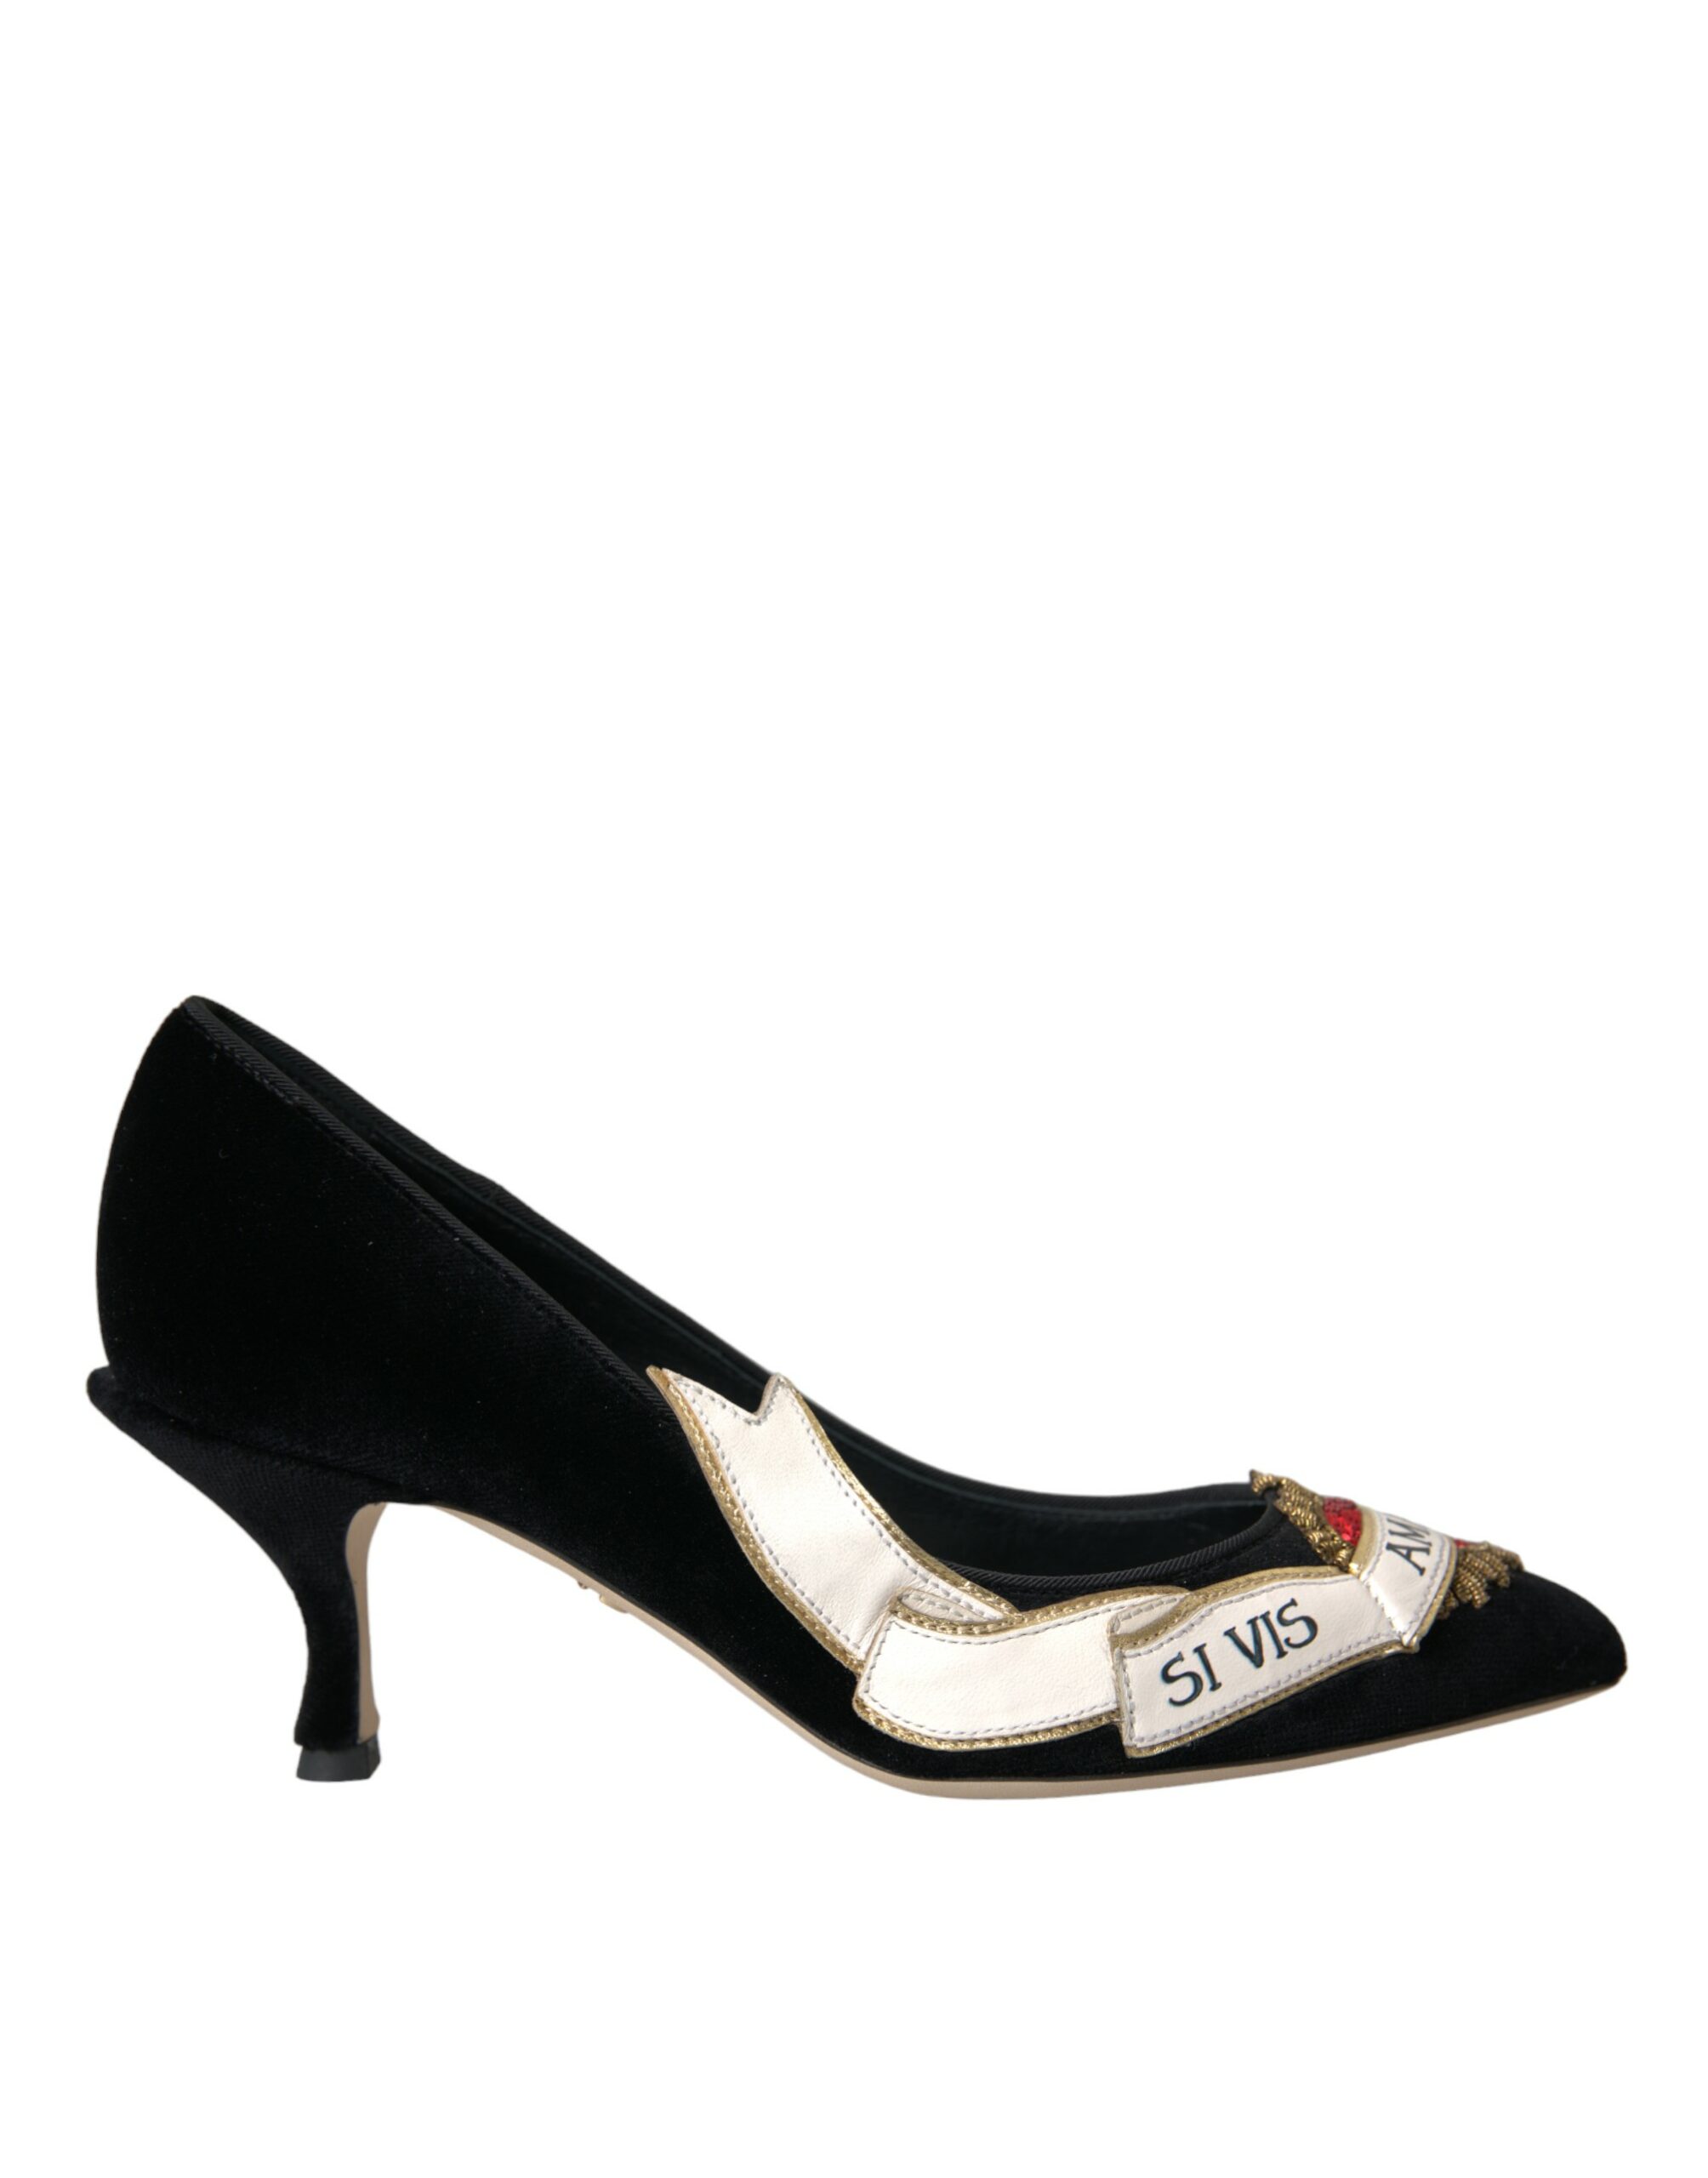 Dolce & Gabbana Black Suede Leather Amari Heels Pumps Shoes EU37/US6.5 Black